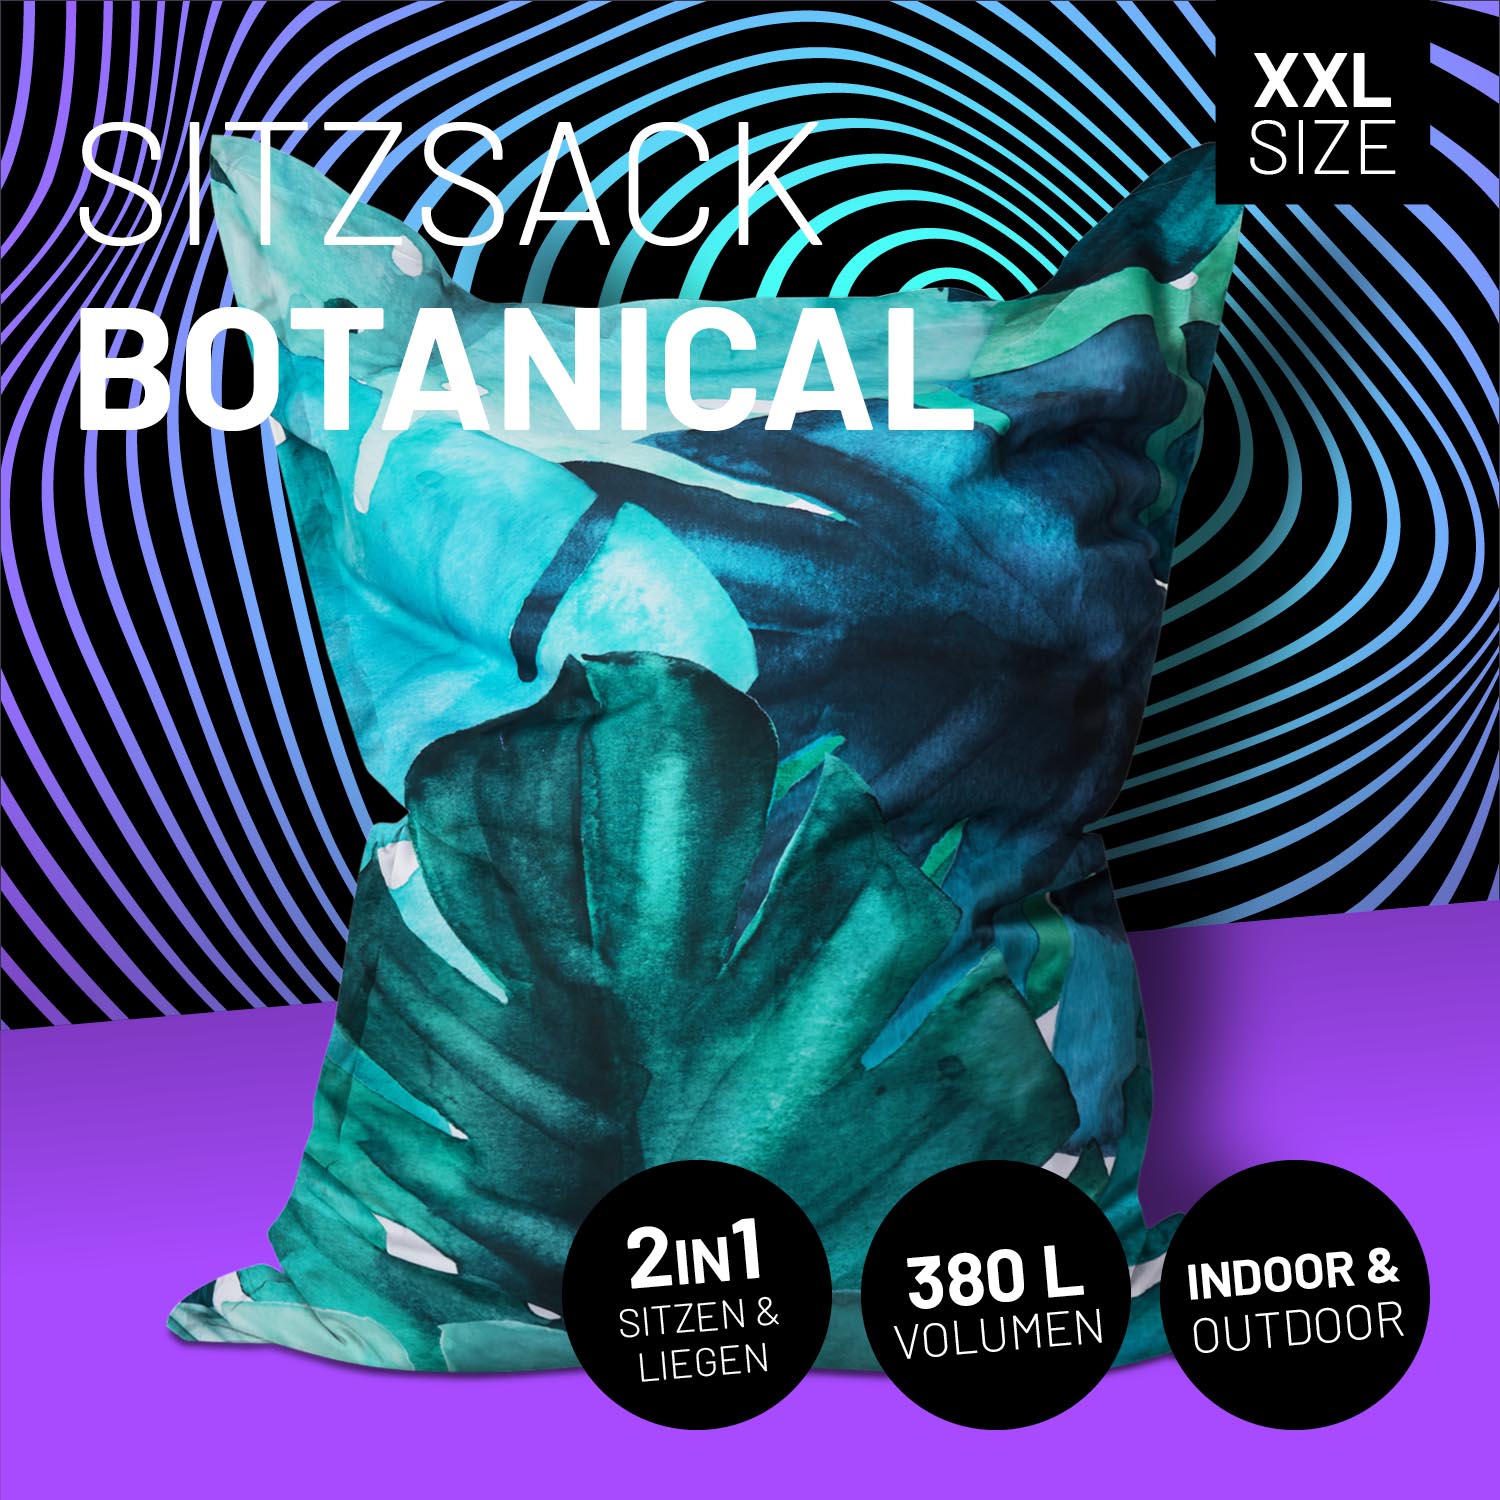 Sitzsack Classic XXL (380 L) - indoor & outdoor - Special Edition Botanical